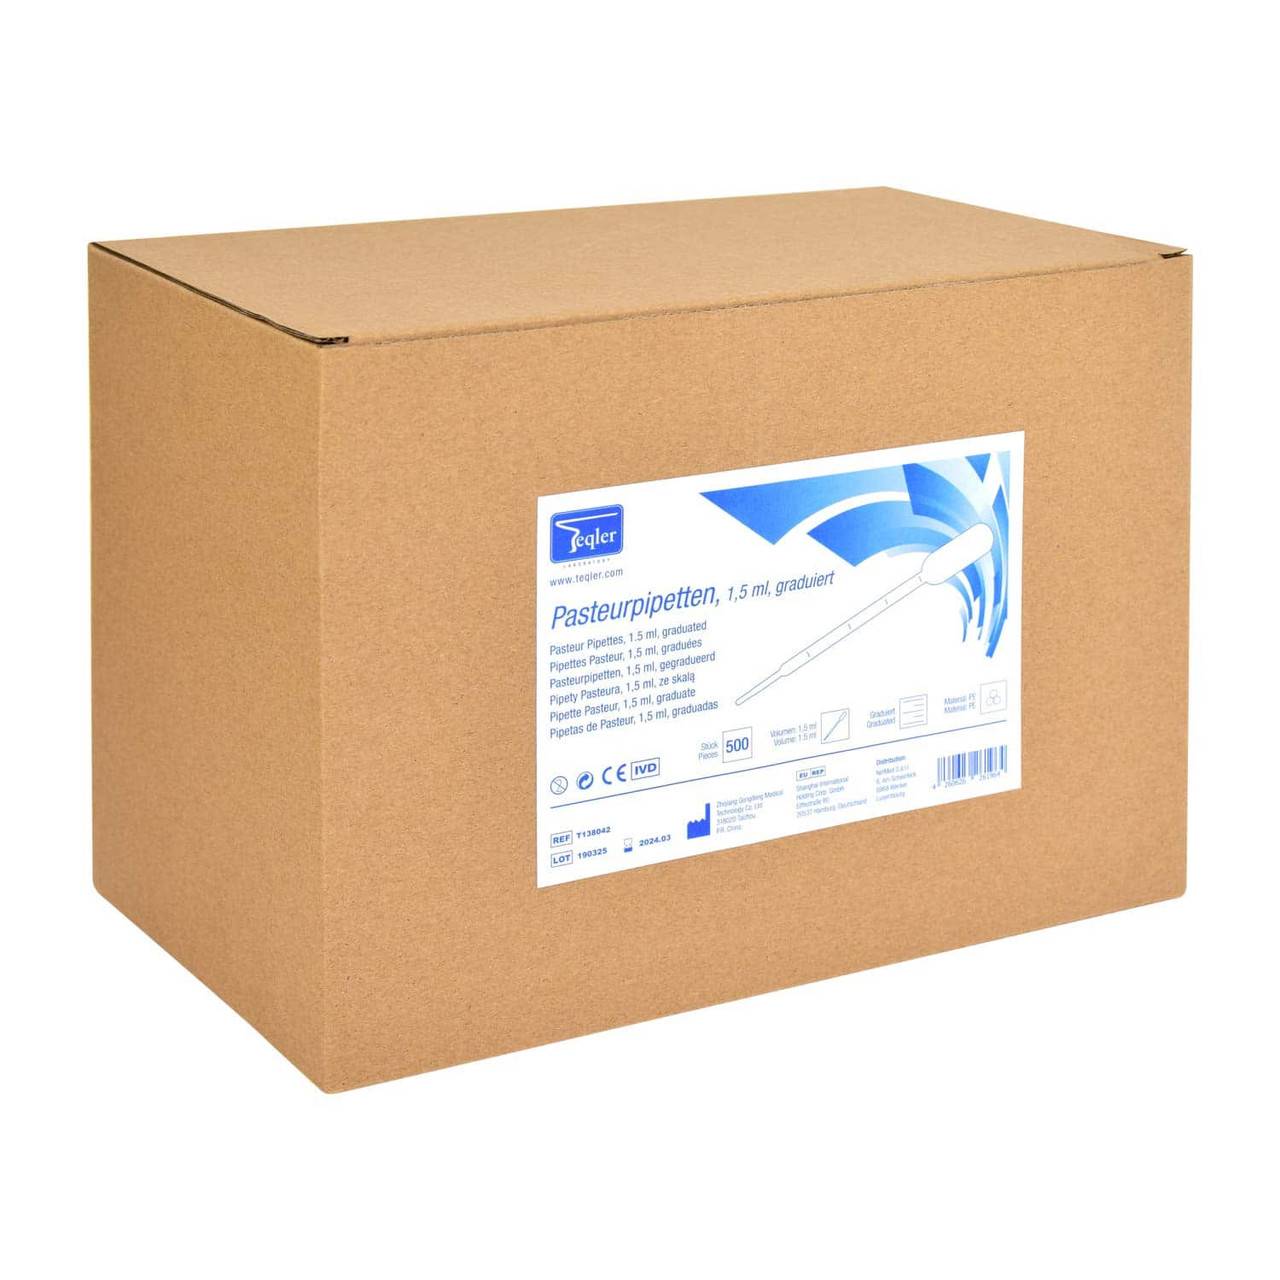 Polyethylene Pasteur Pipettes 1.5ml Box of 500 - UKMEDI